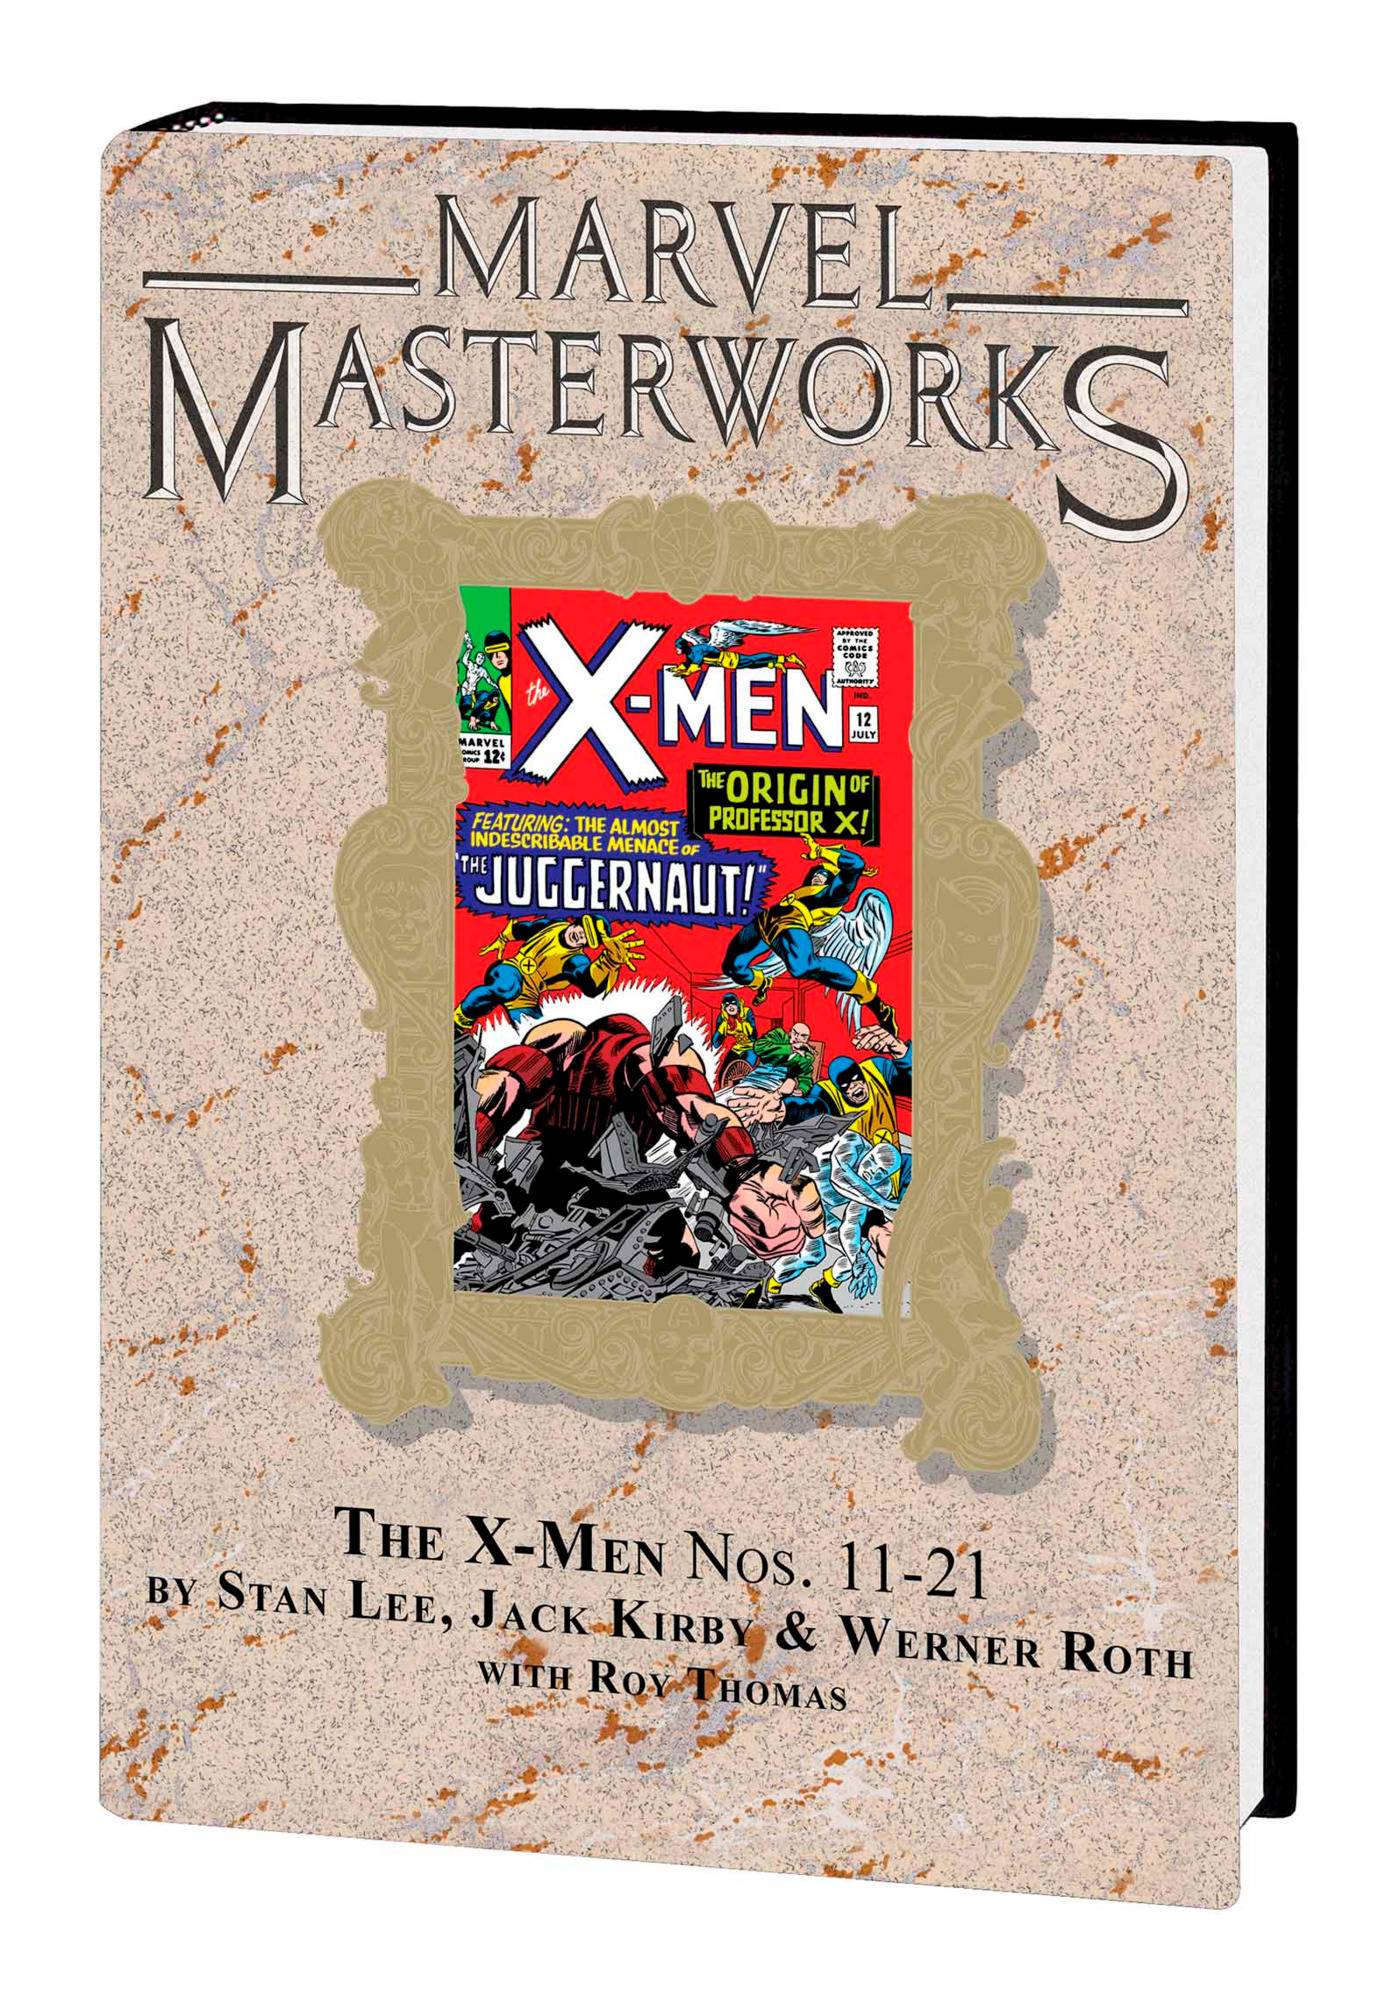 MMW X-MEN HC VOL 02 DM VAR REMASTERWORKS